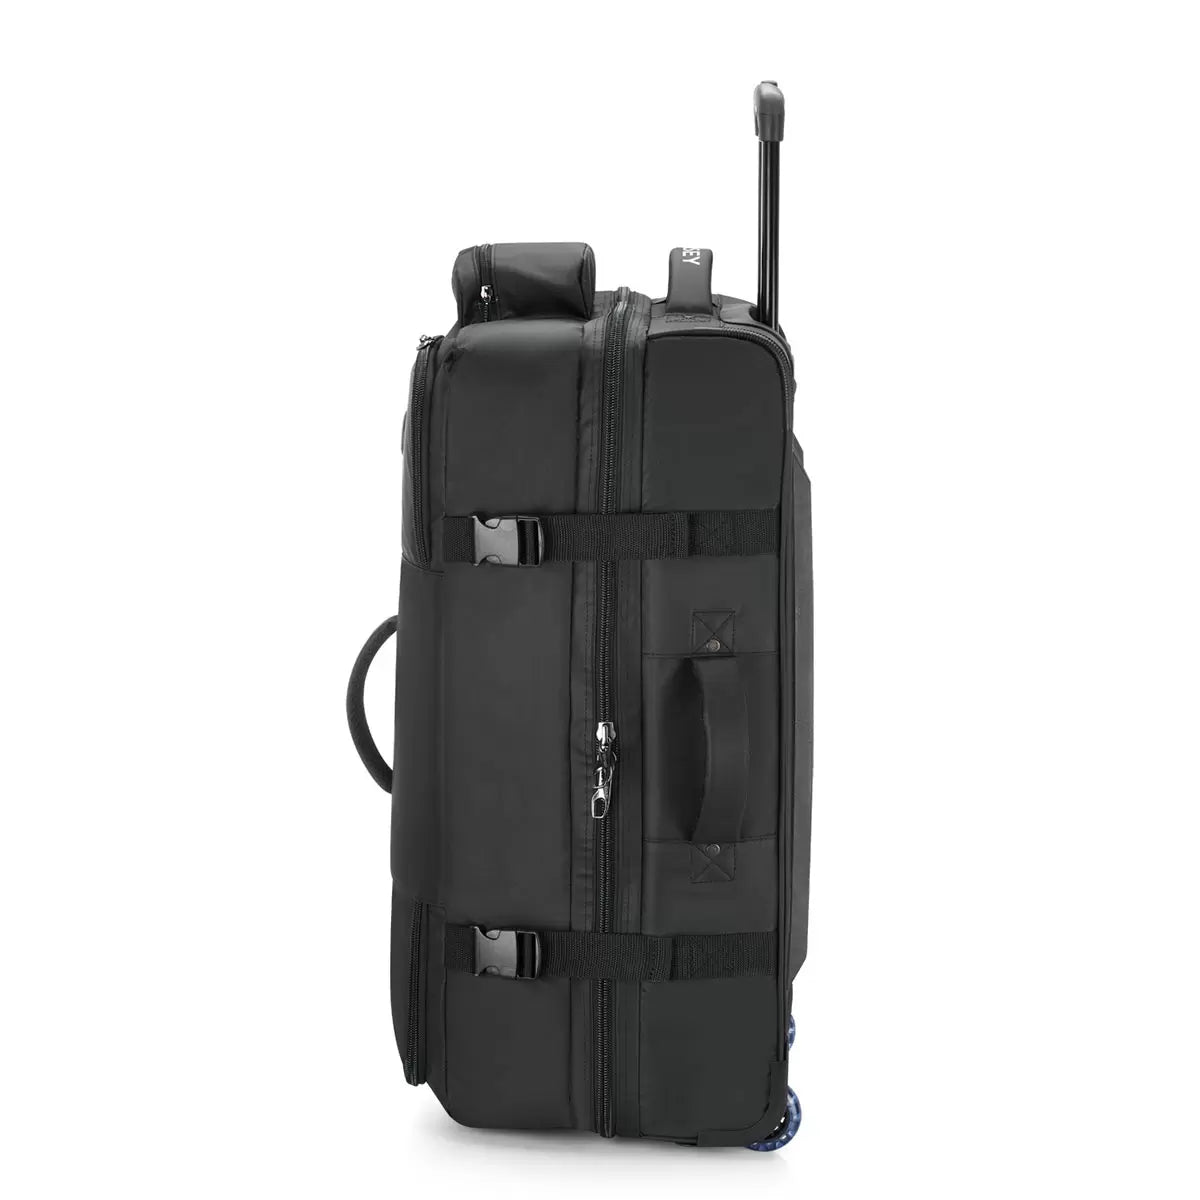 Brand New Delsey 28.7" (73cm) Wheeled Waterproof Duffel Bag Travel Luggage